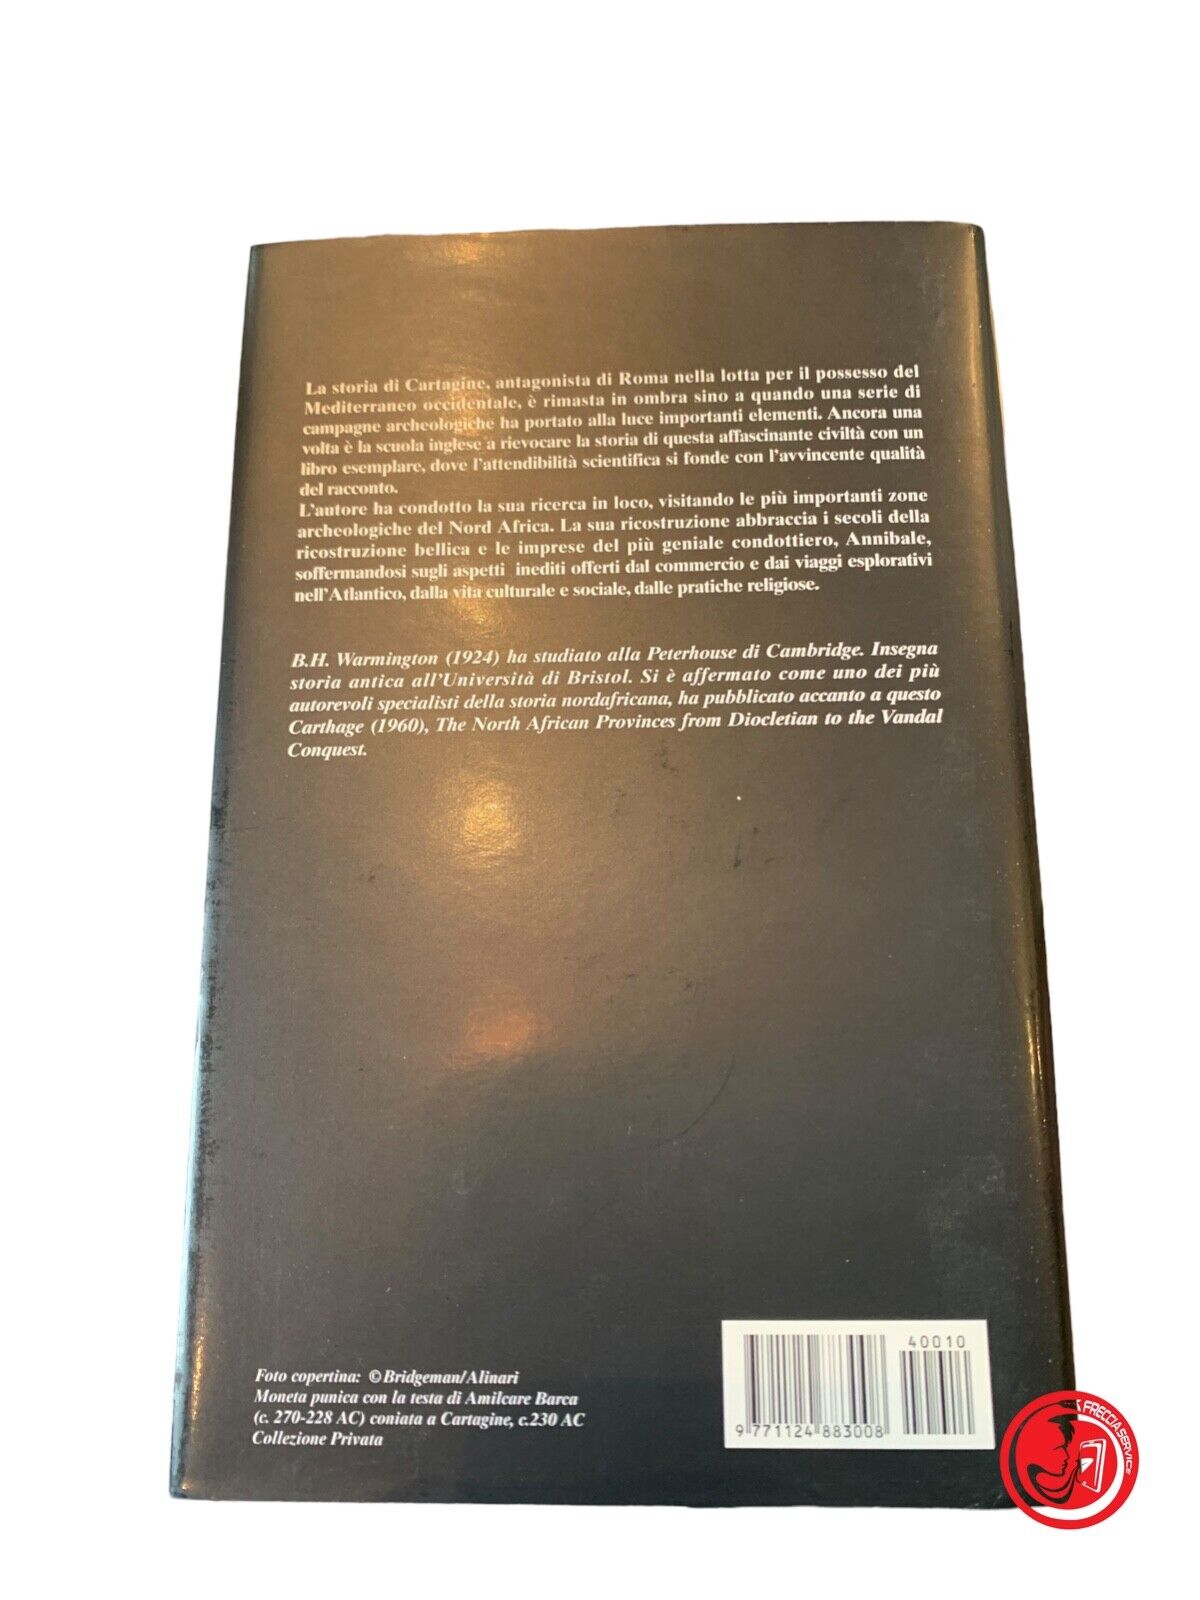 Storia di Cartagine - Brian H. Warmington - Einaudi Editore